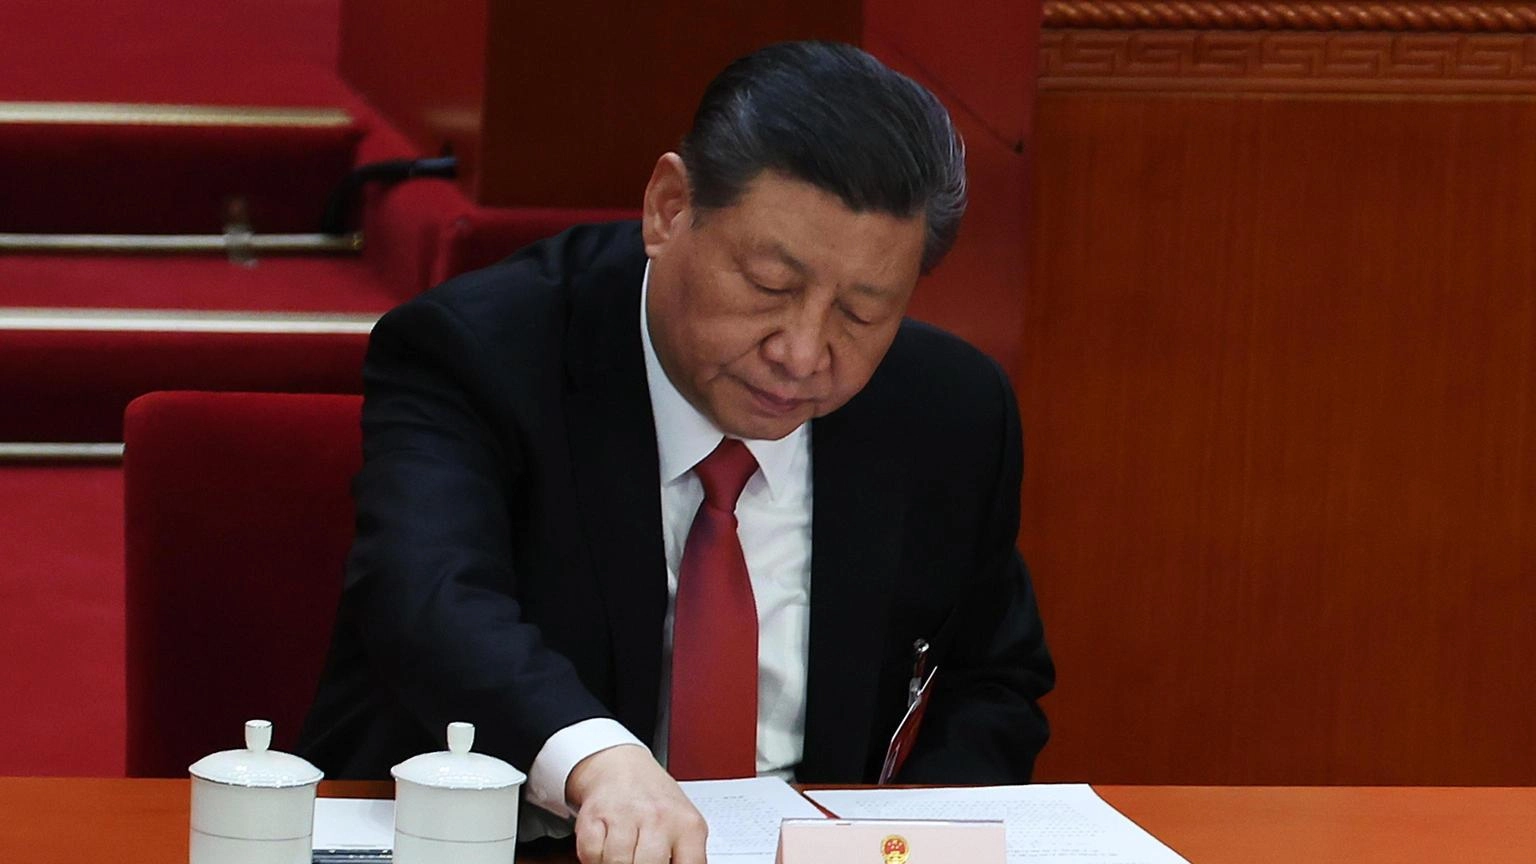 Xi incontra rappresentanti accademici e di imprese Usa